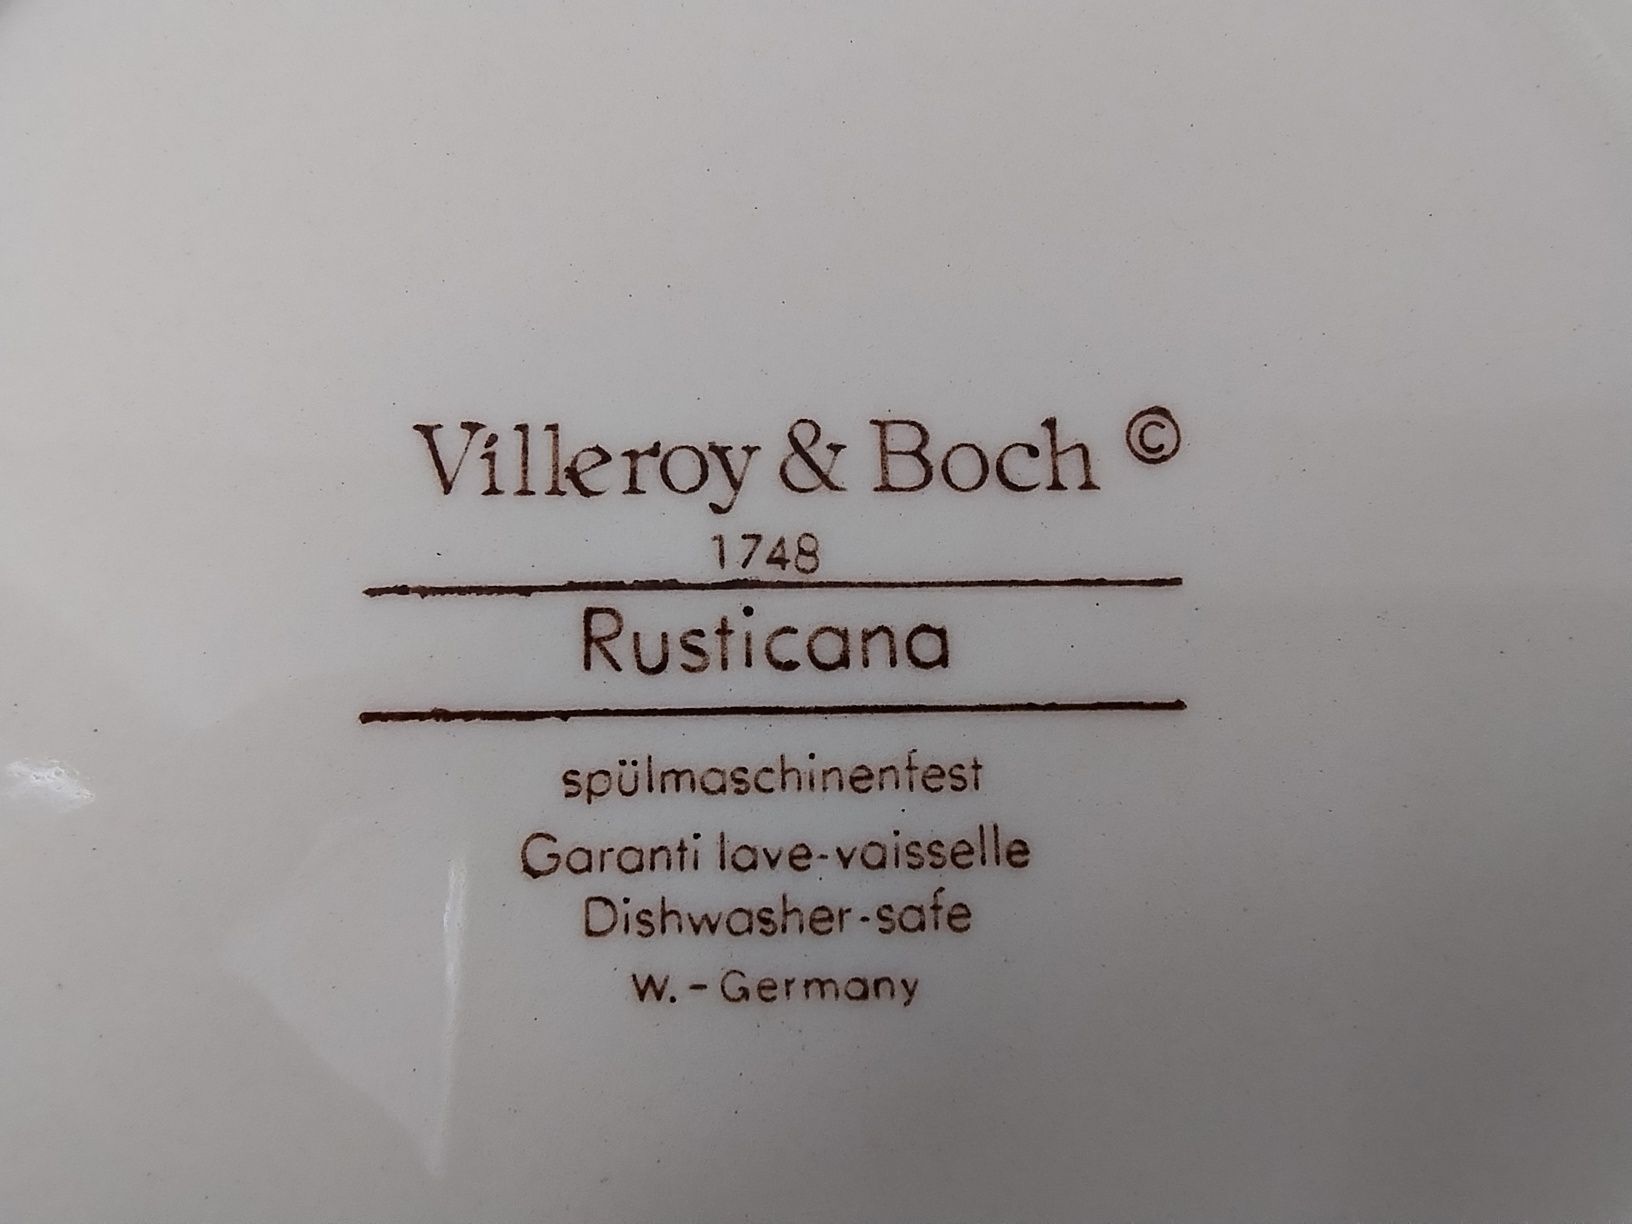 Zestaw śniadaniowy Villeroy & Boch. Rusticana.